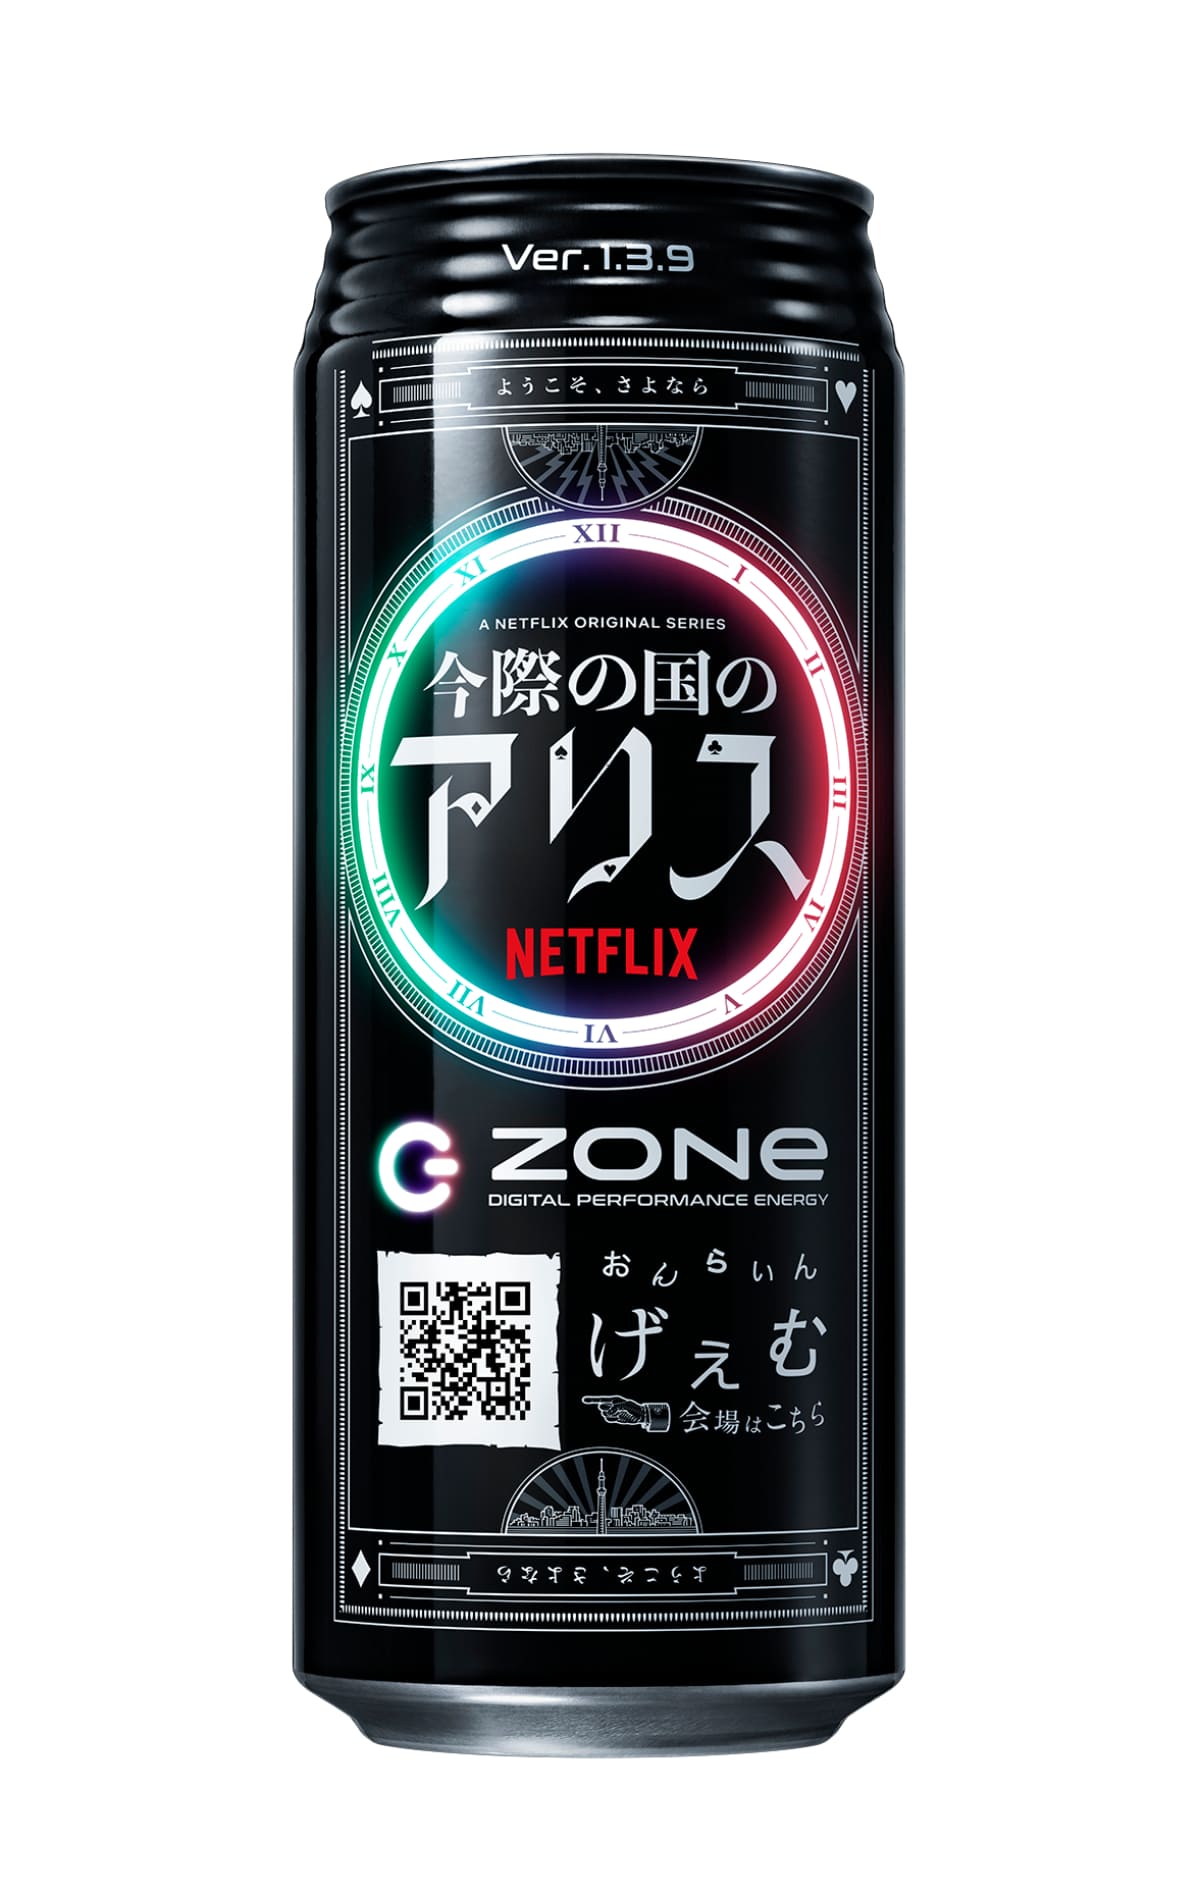 ZONe Ver.1.3.9 Netflixコラボ缶